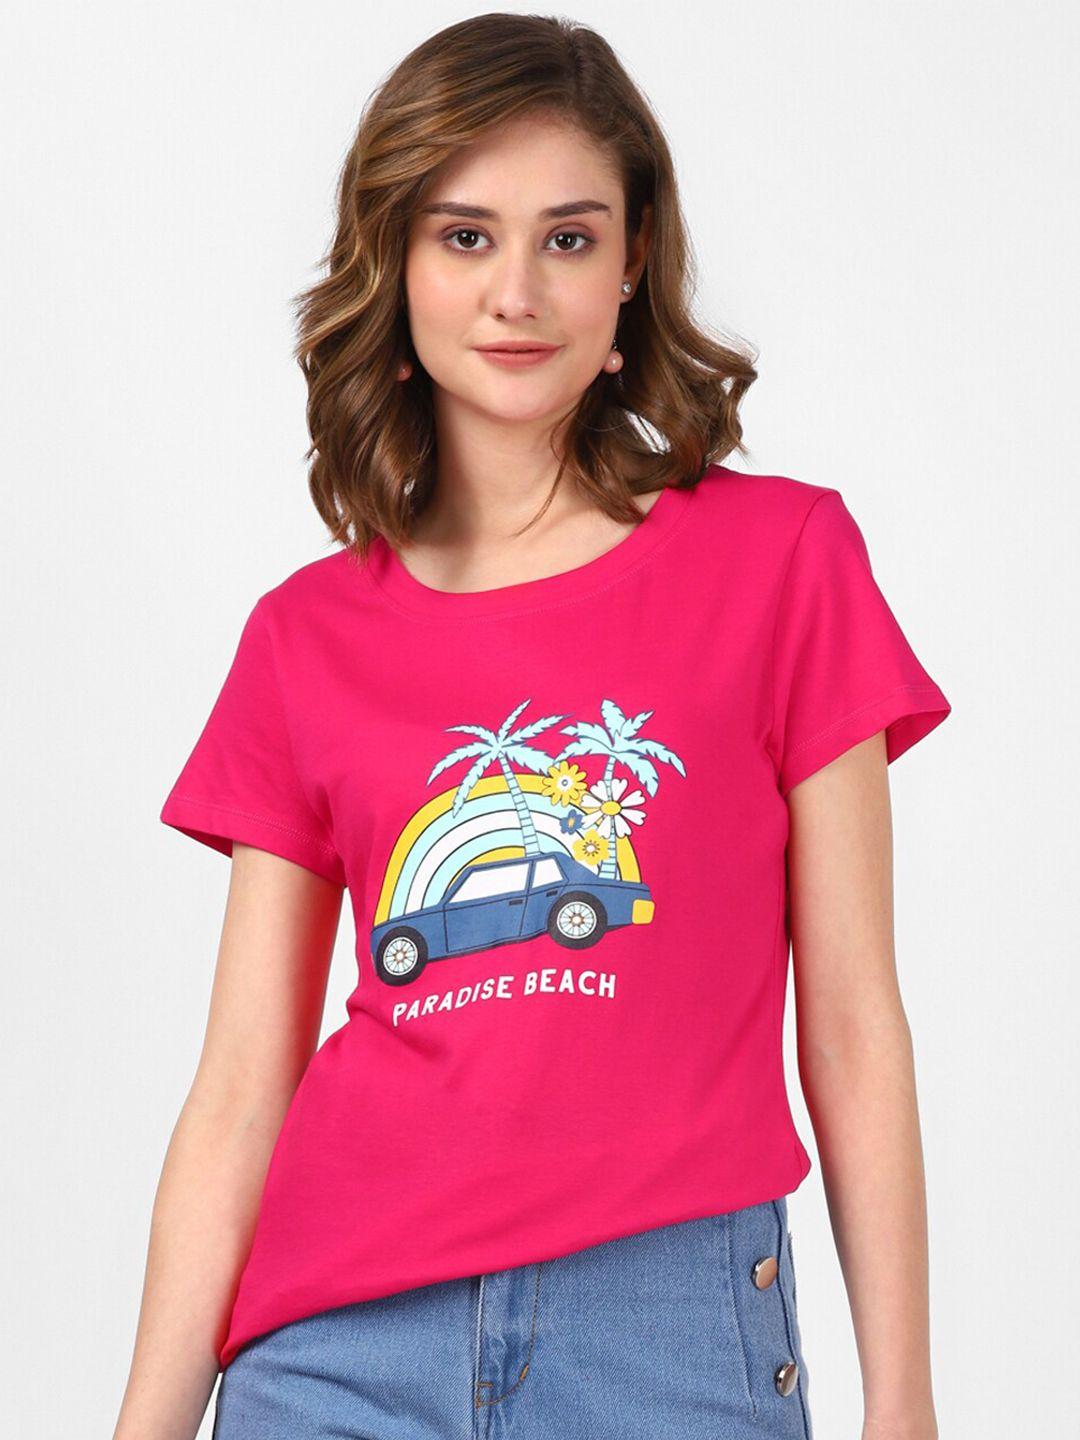 urbanmark-graphic-printed-slim-fit-pure-cotton-t-shirt